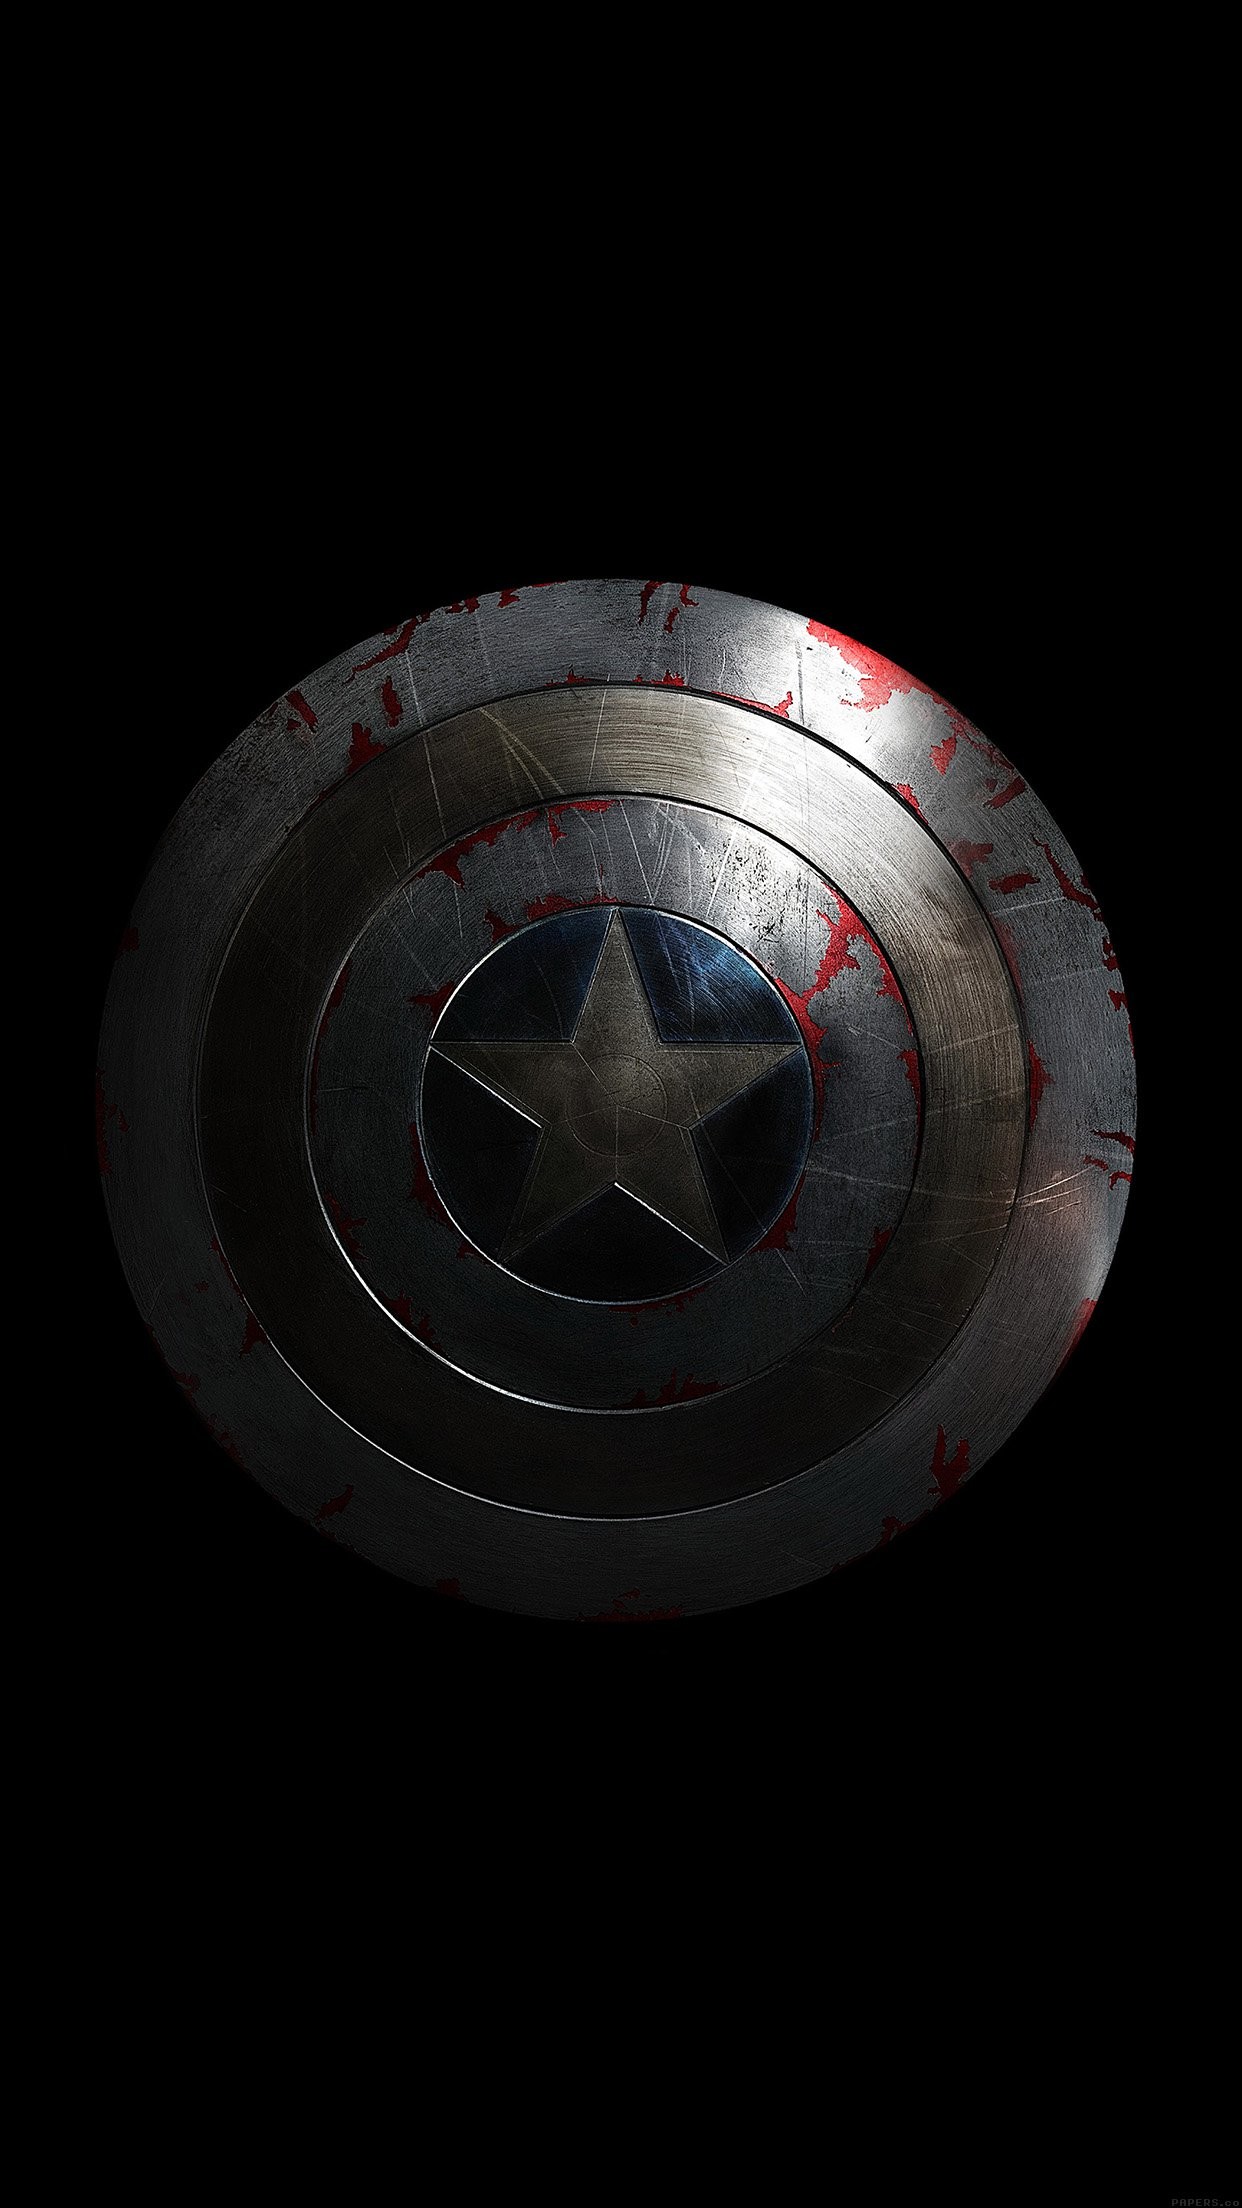 1242x2208 captain america avengers hero sheild small dark iPhone 7 plus wallpaper